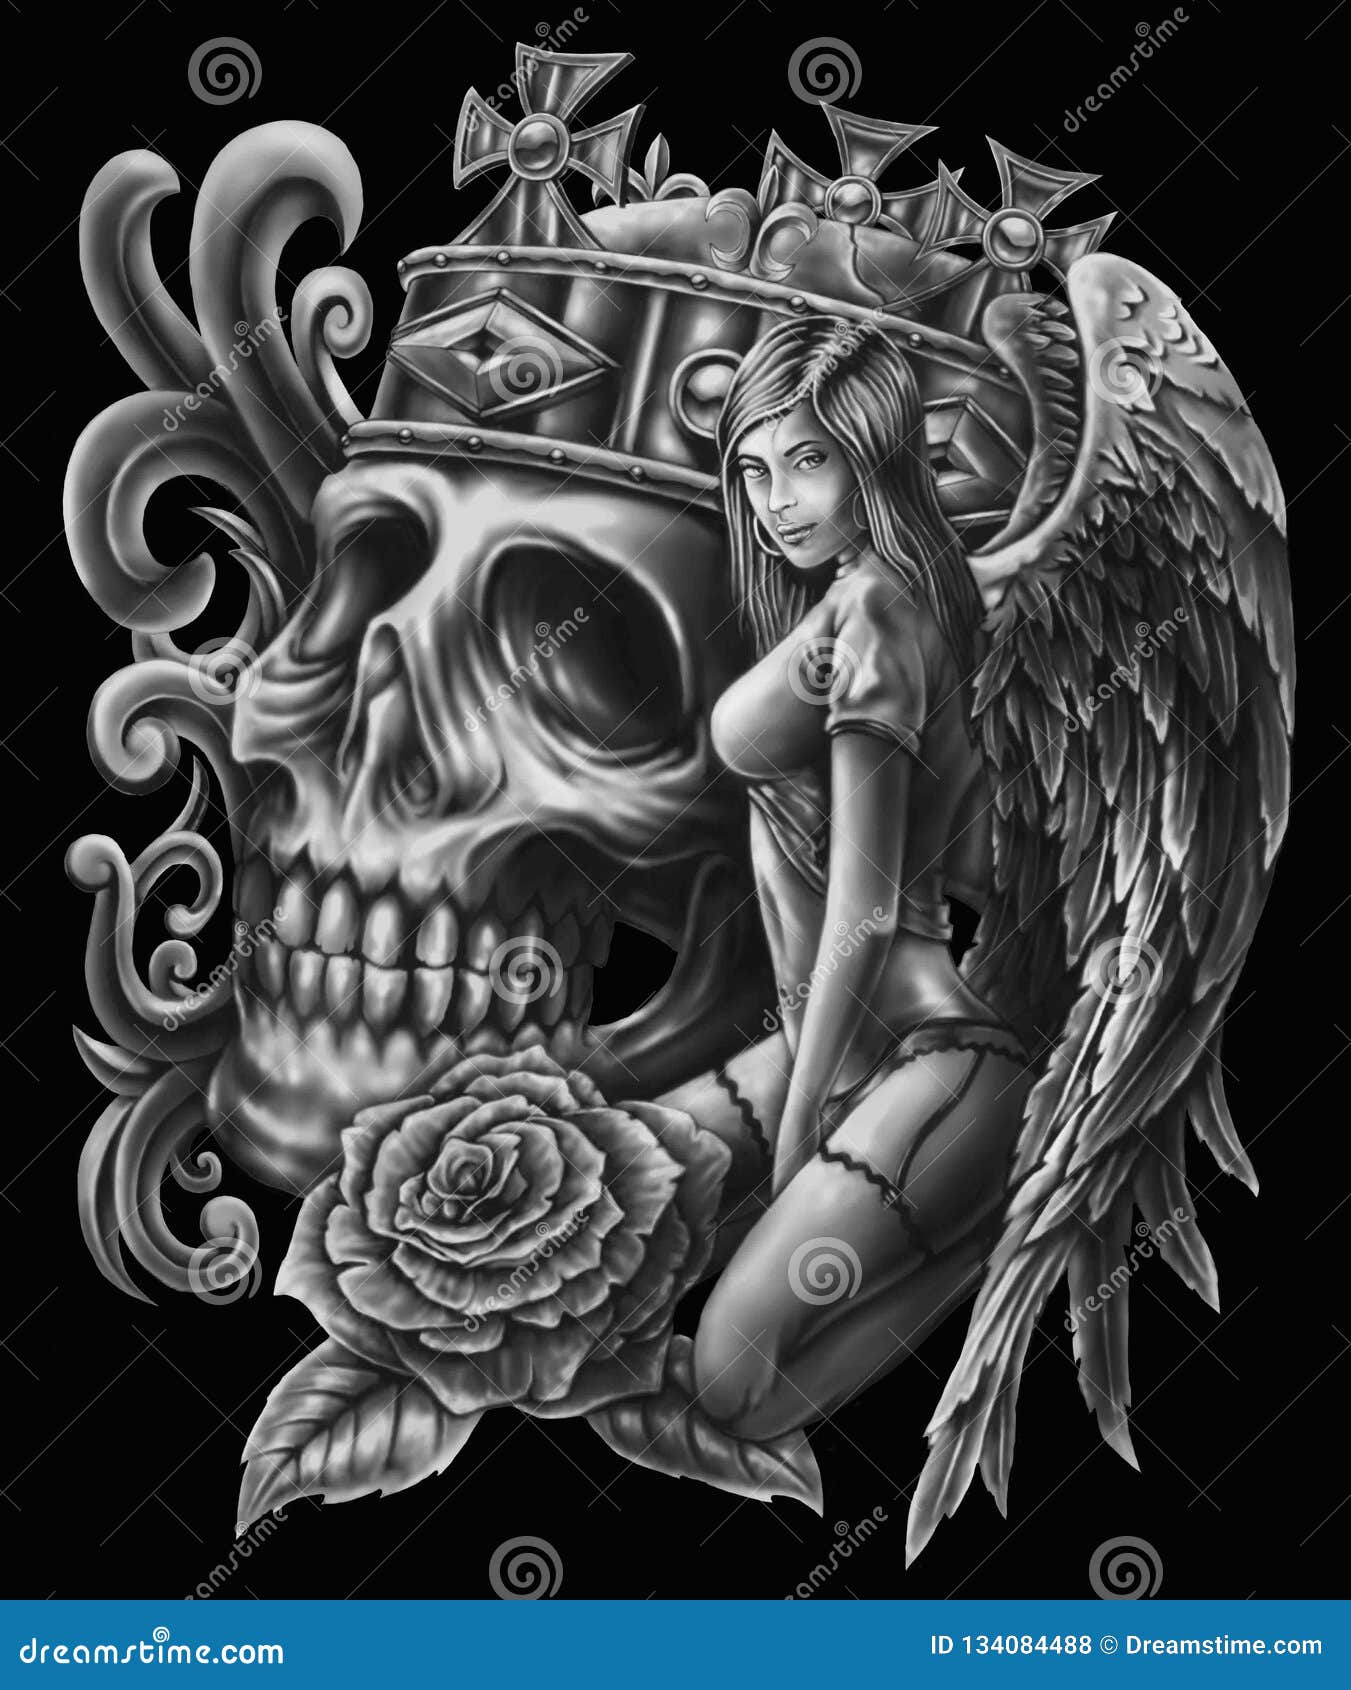 Angel and skull stock illustration. Illustration of rose - 134084488